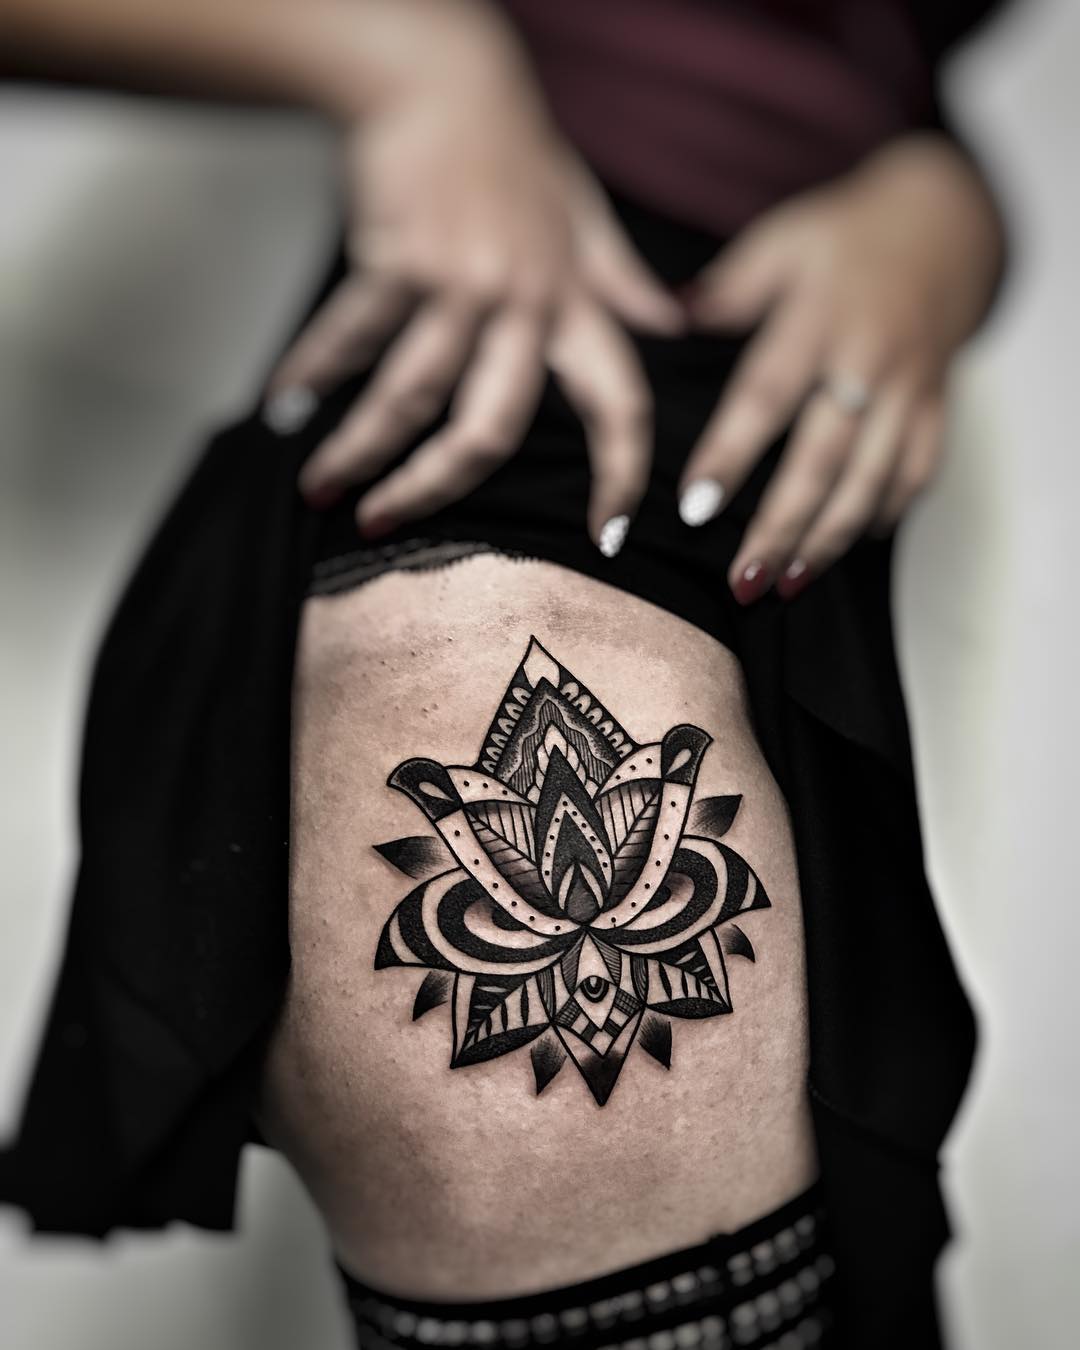 Stylized Lotus tattoo by Mike Nofuck